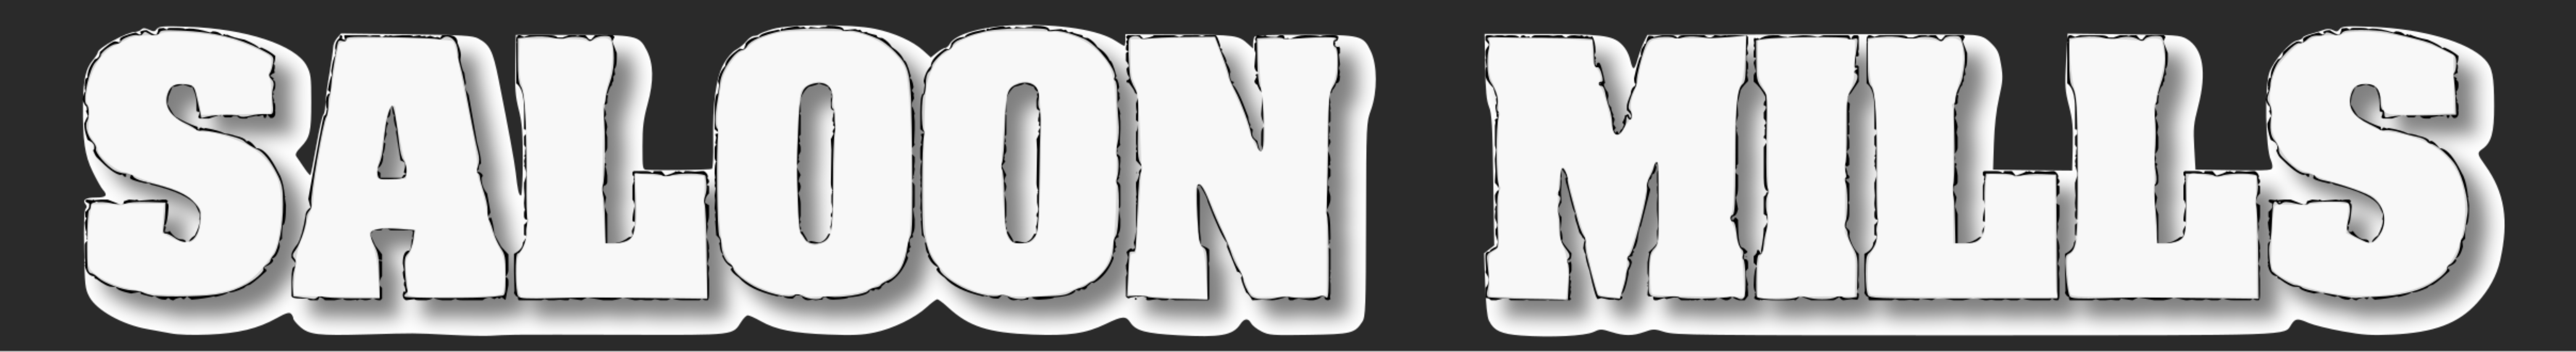 Newspiper dark mode logo 